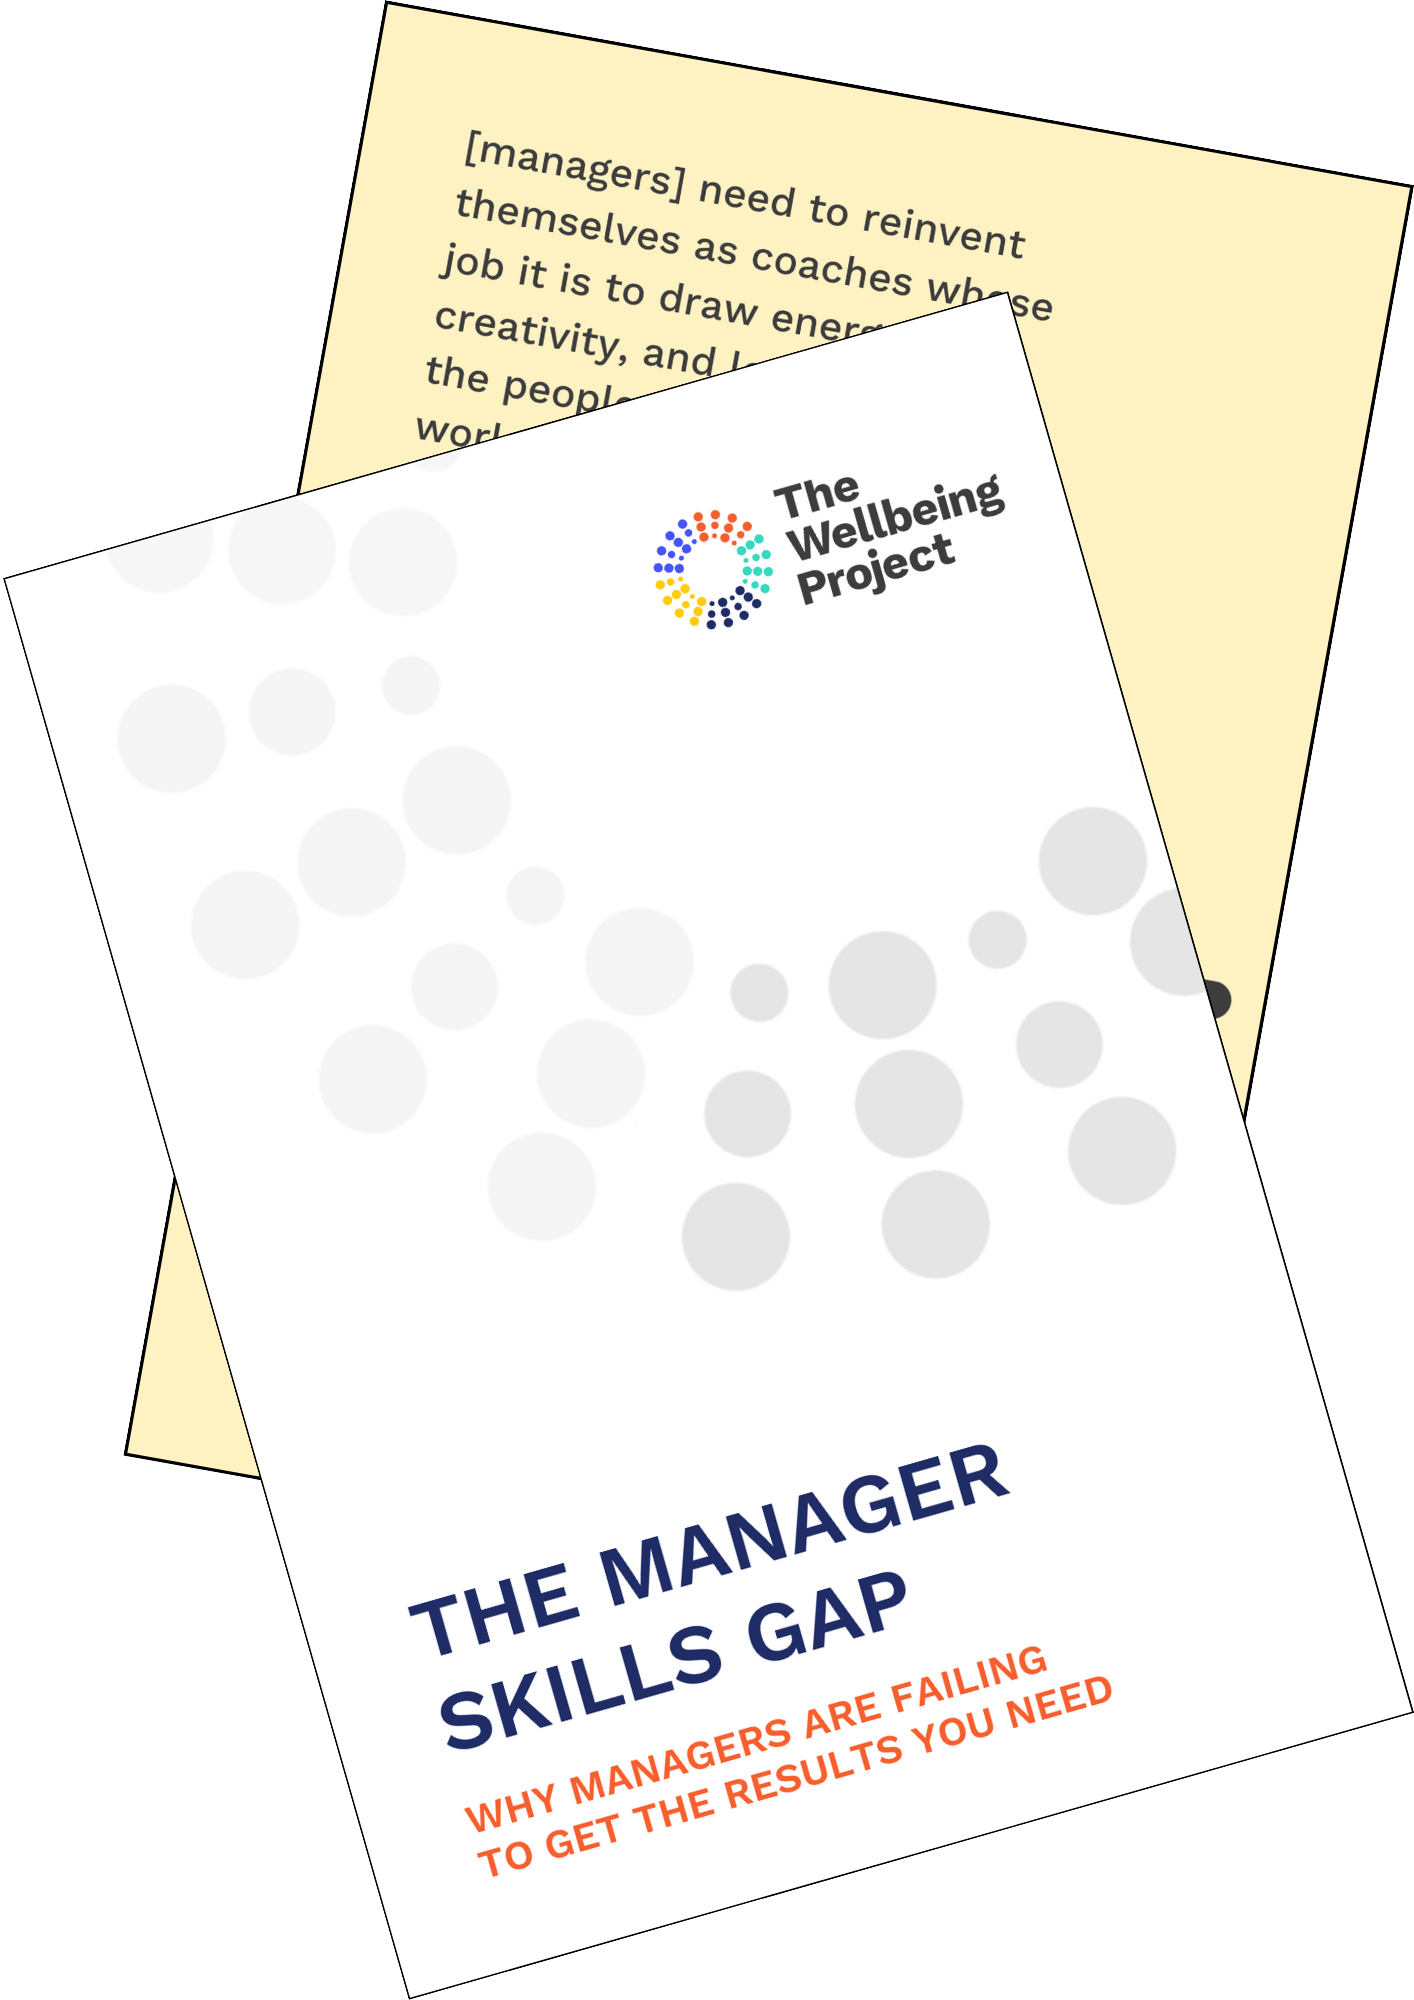 manager skills gap graphic image